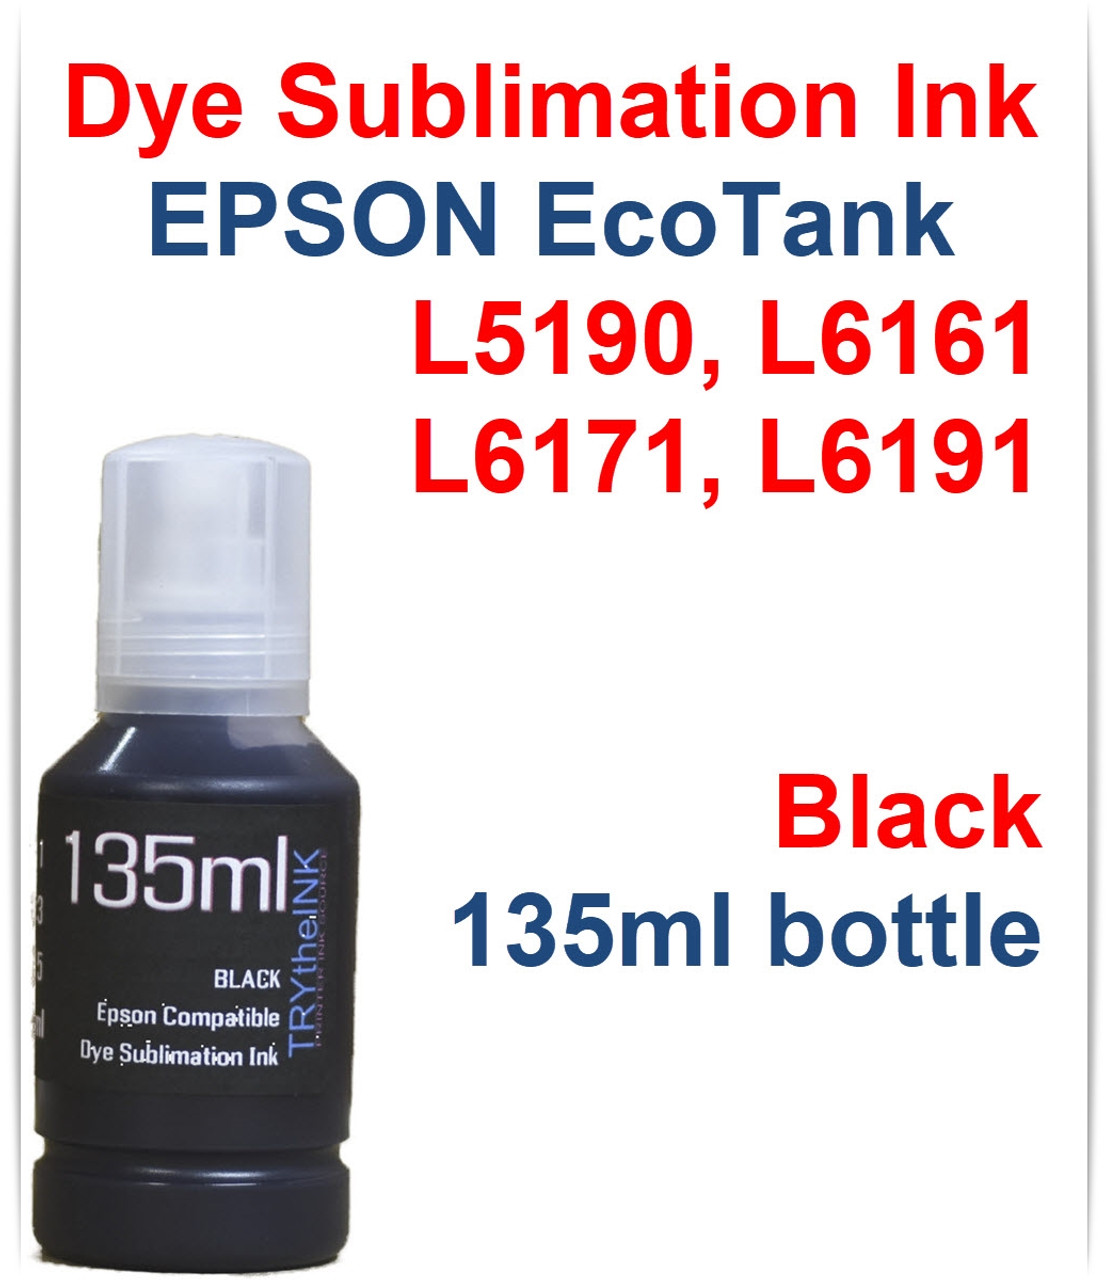 Black 135ml bottle Dye Sublimation Ink for EPSON EcoTank L1110 L3110 L3150 L4150 L4160 Printer